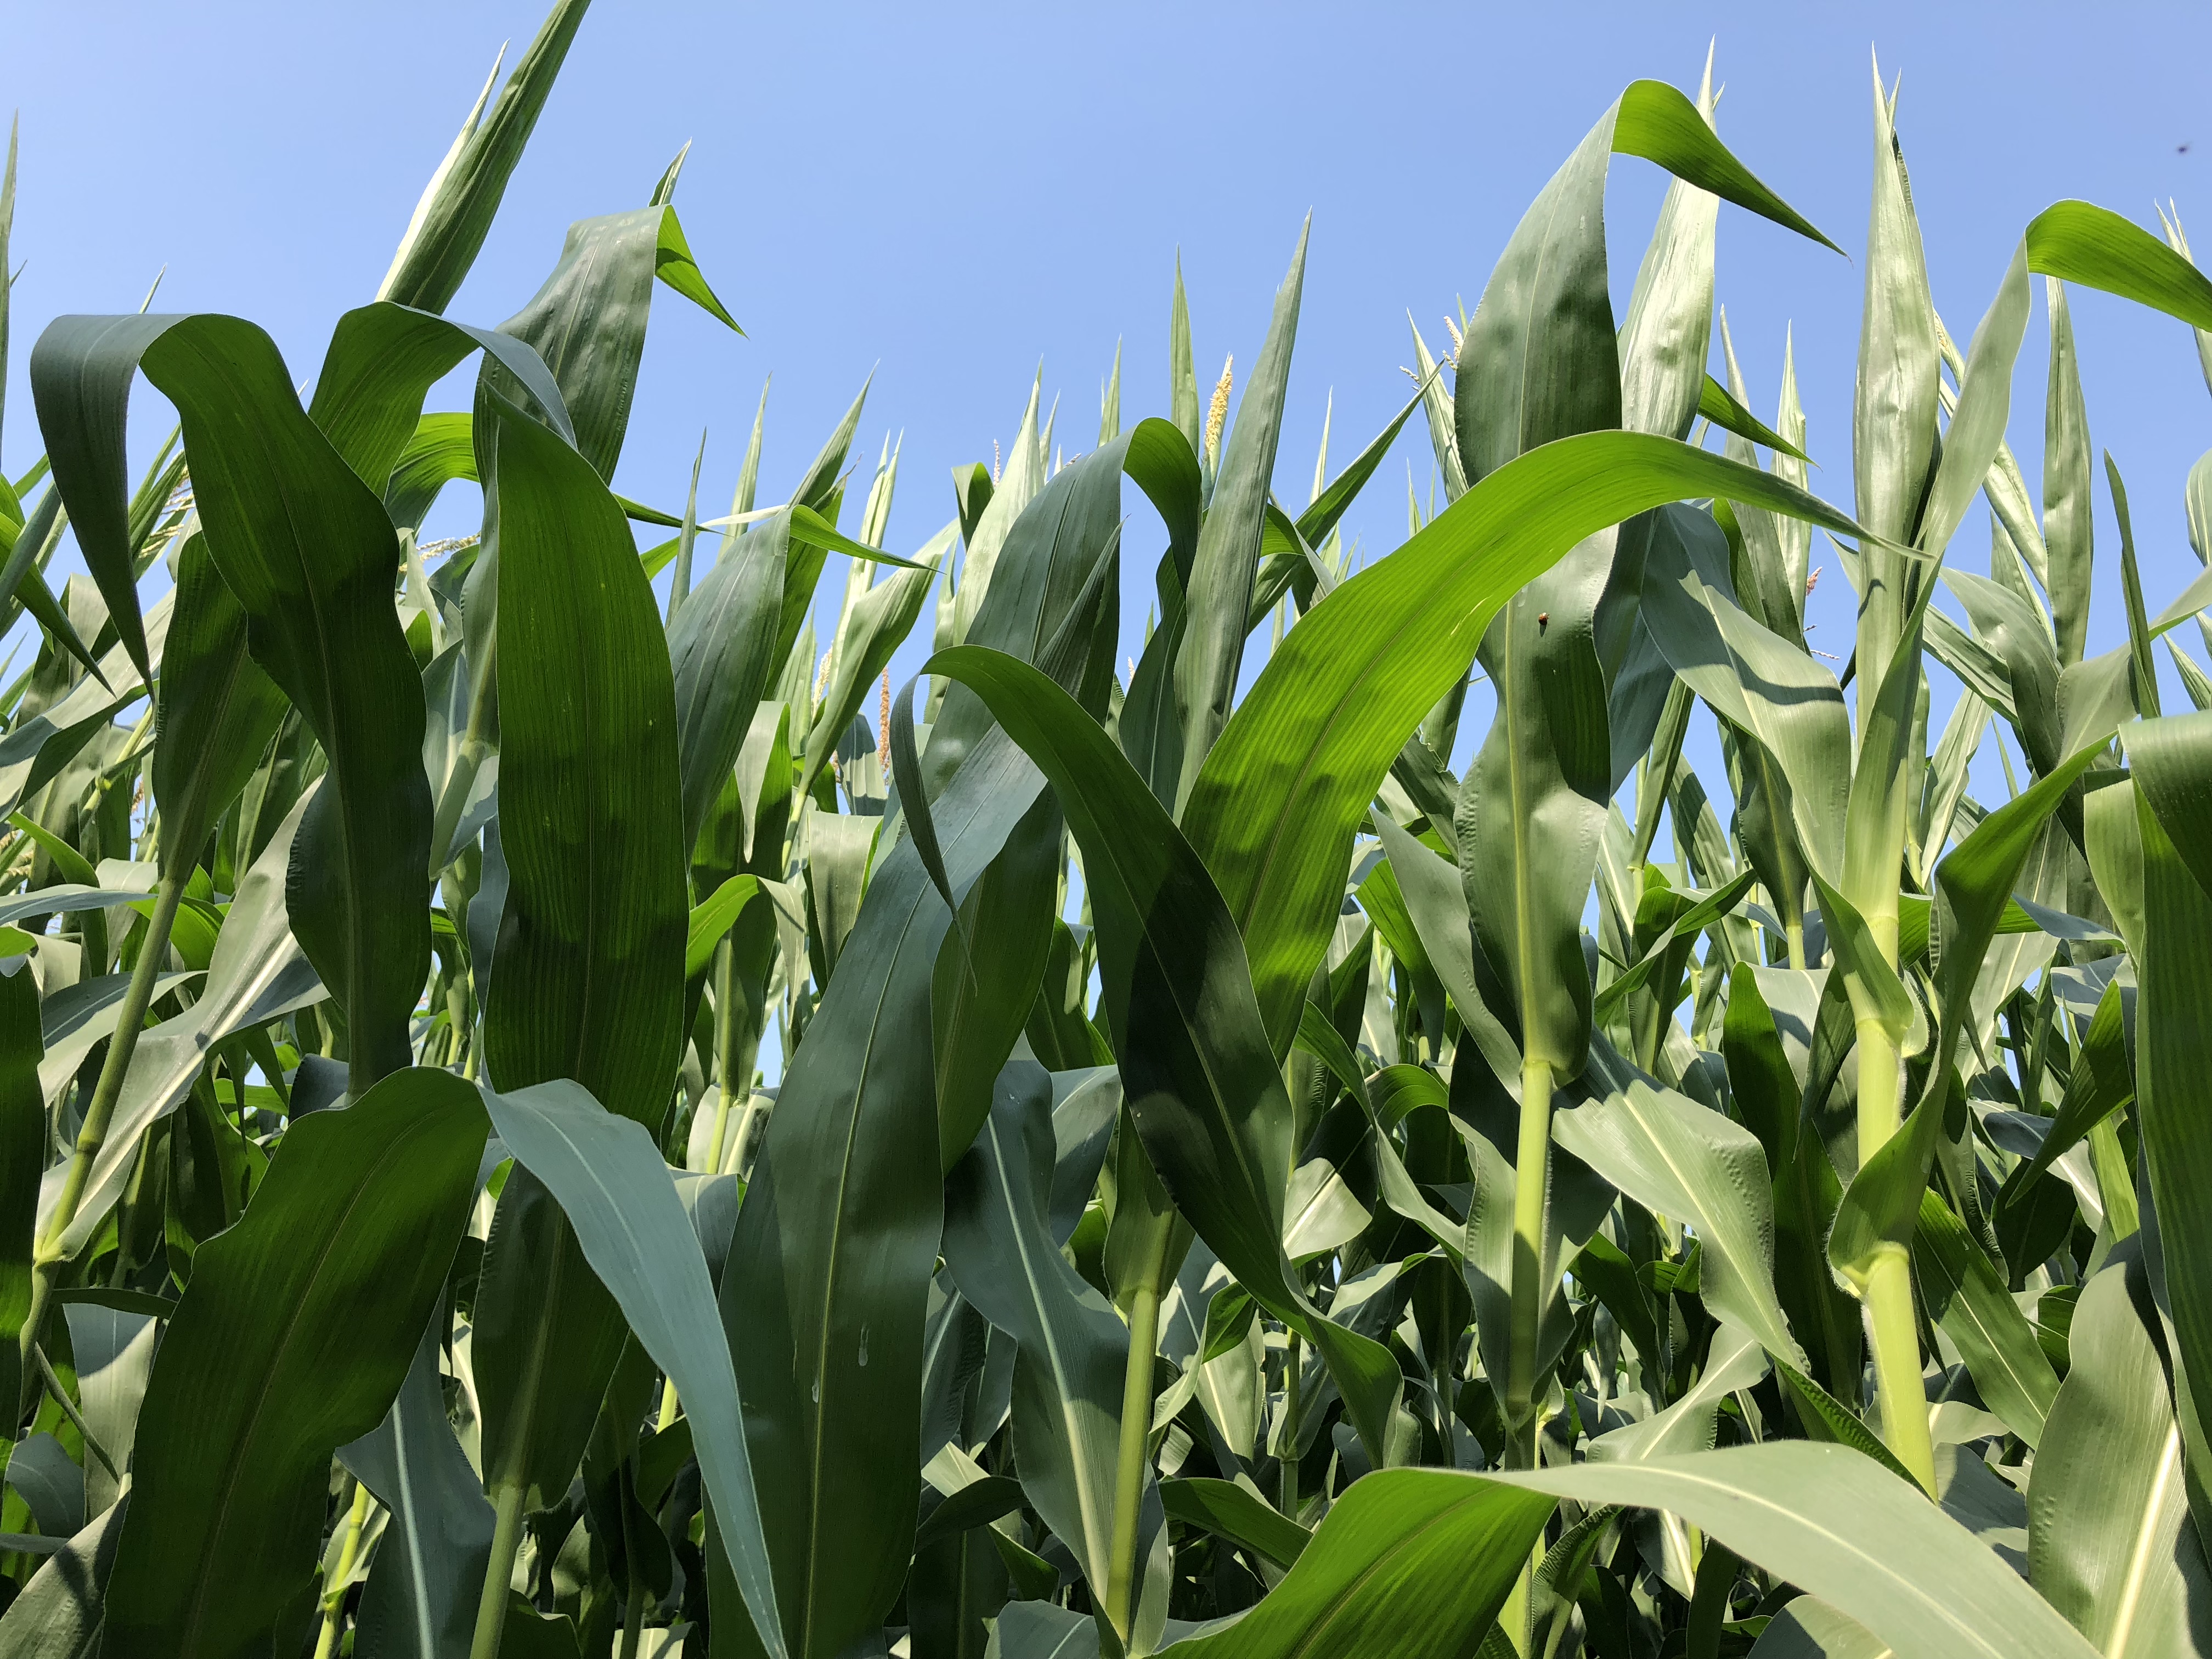 Colour photograph of corn stalks in a field.